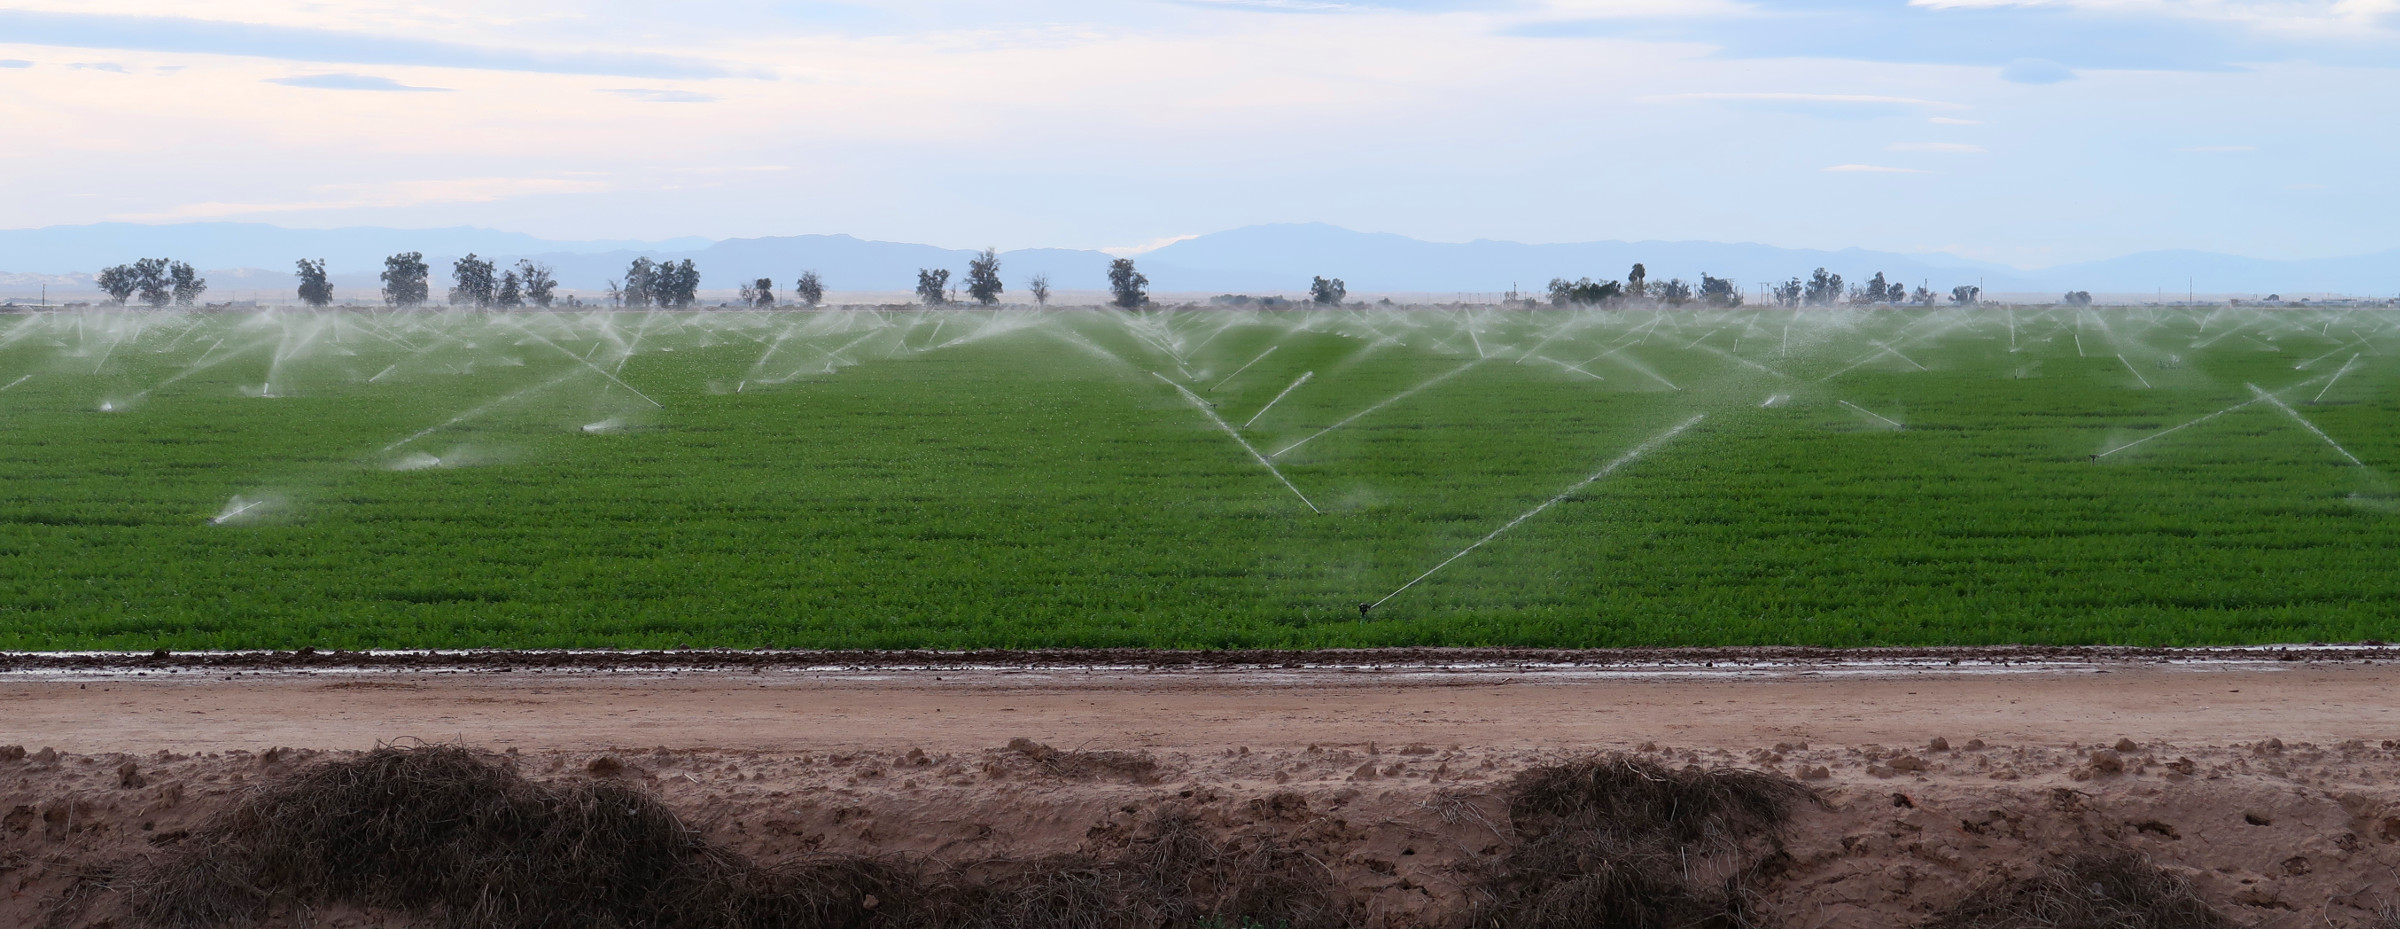 Irrigated field in southern California, in the desert near the Salton Sea